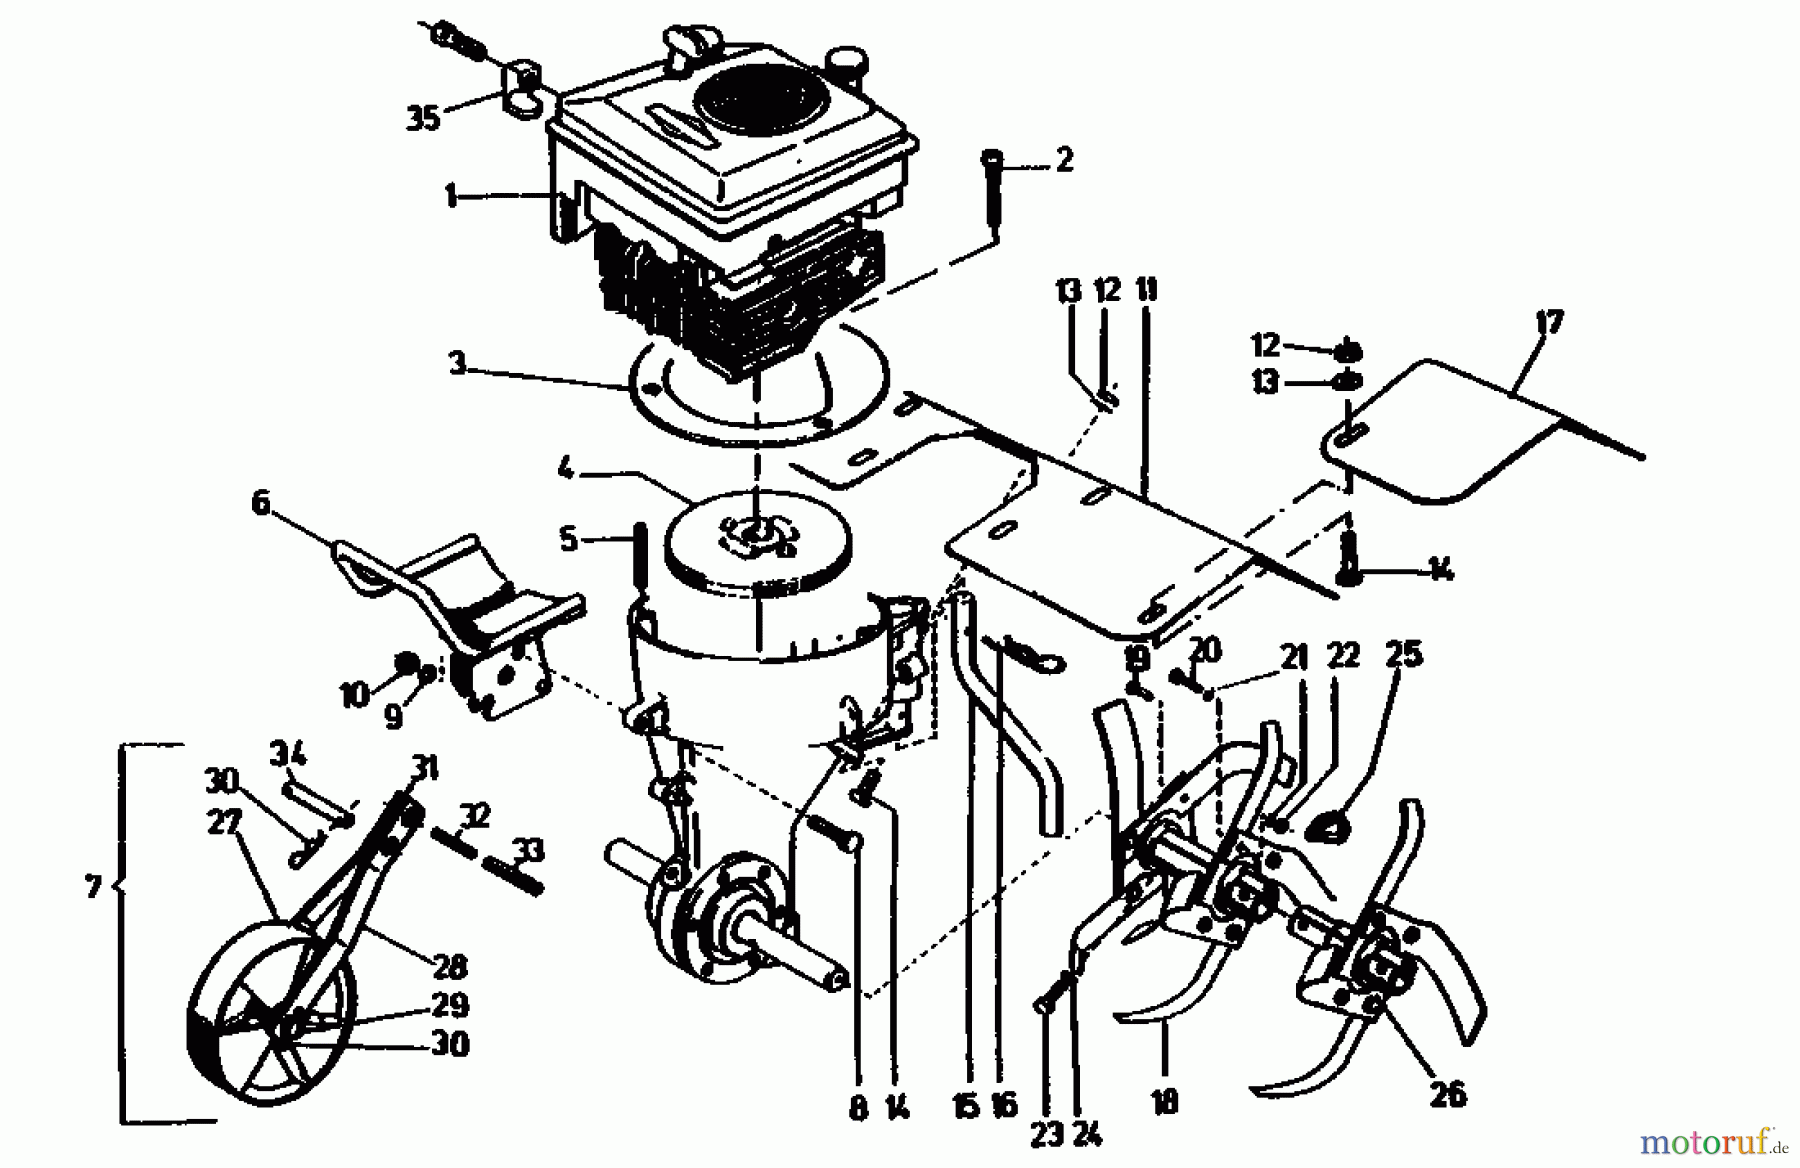  Gutbrod Motorhacken MB 65-35 07516.01  (1990) Grundgerät